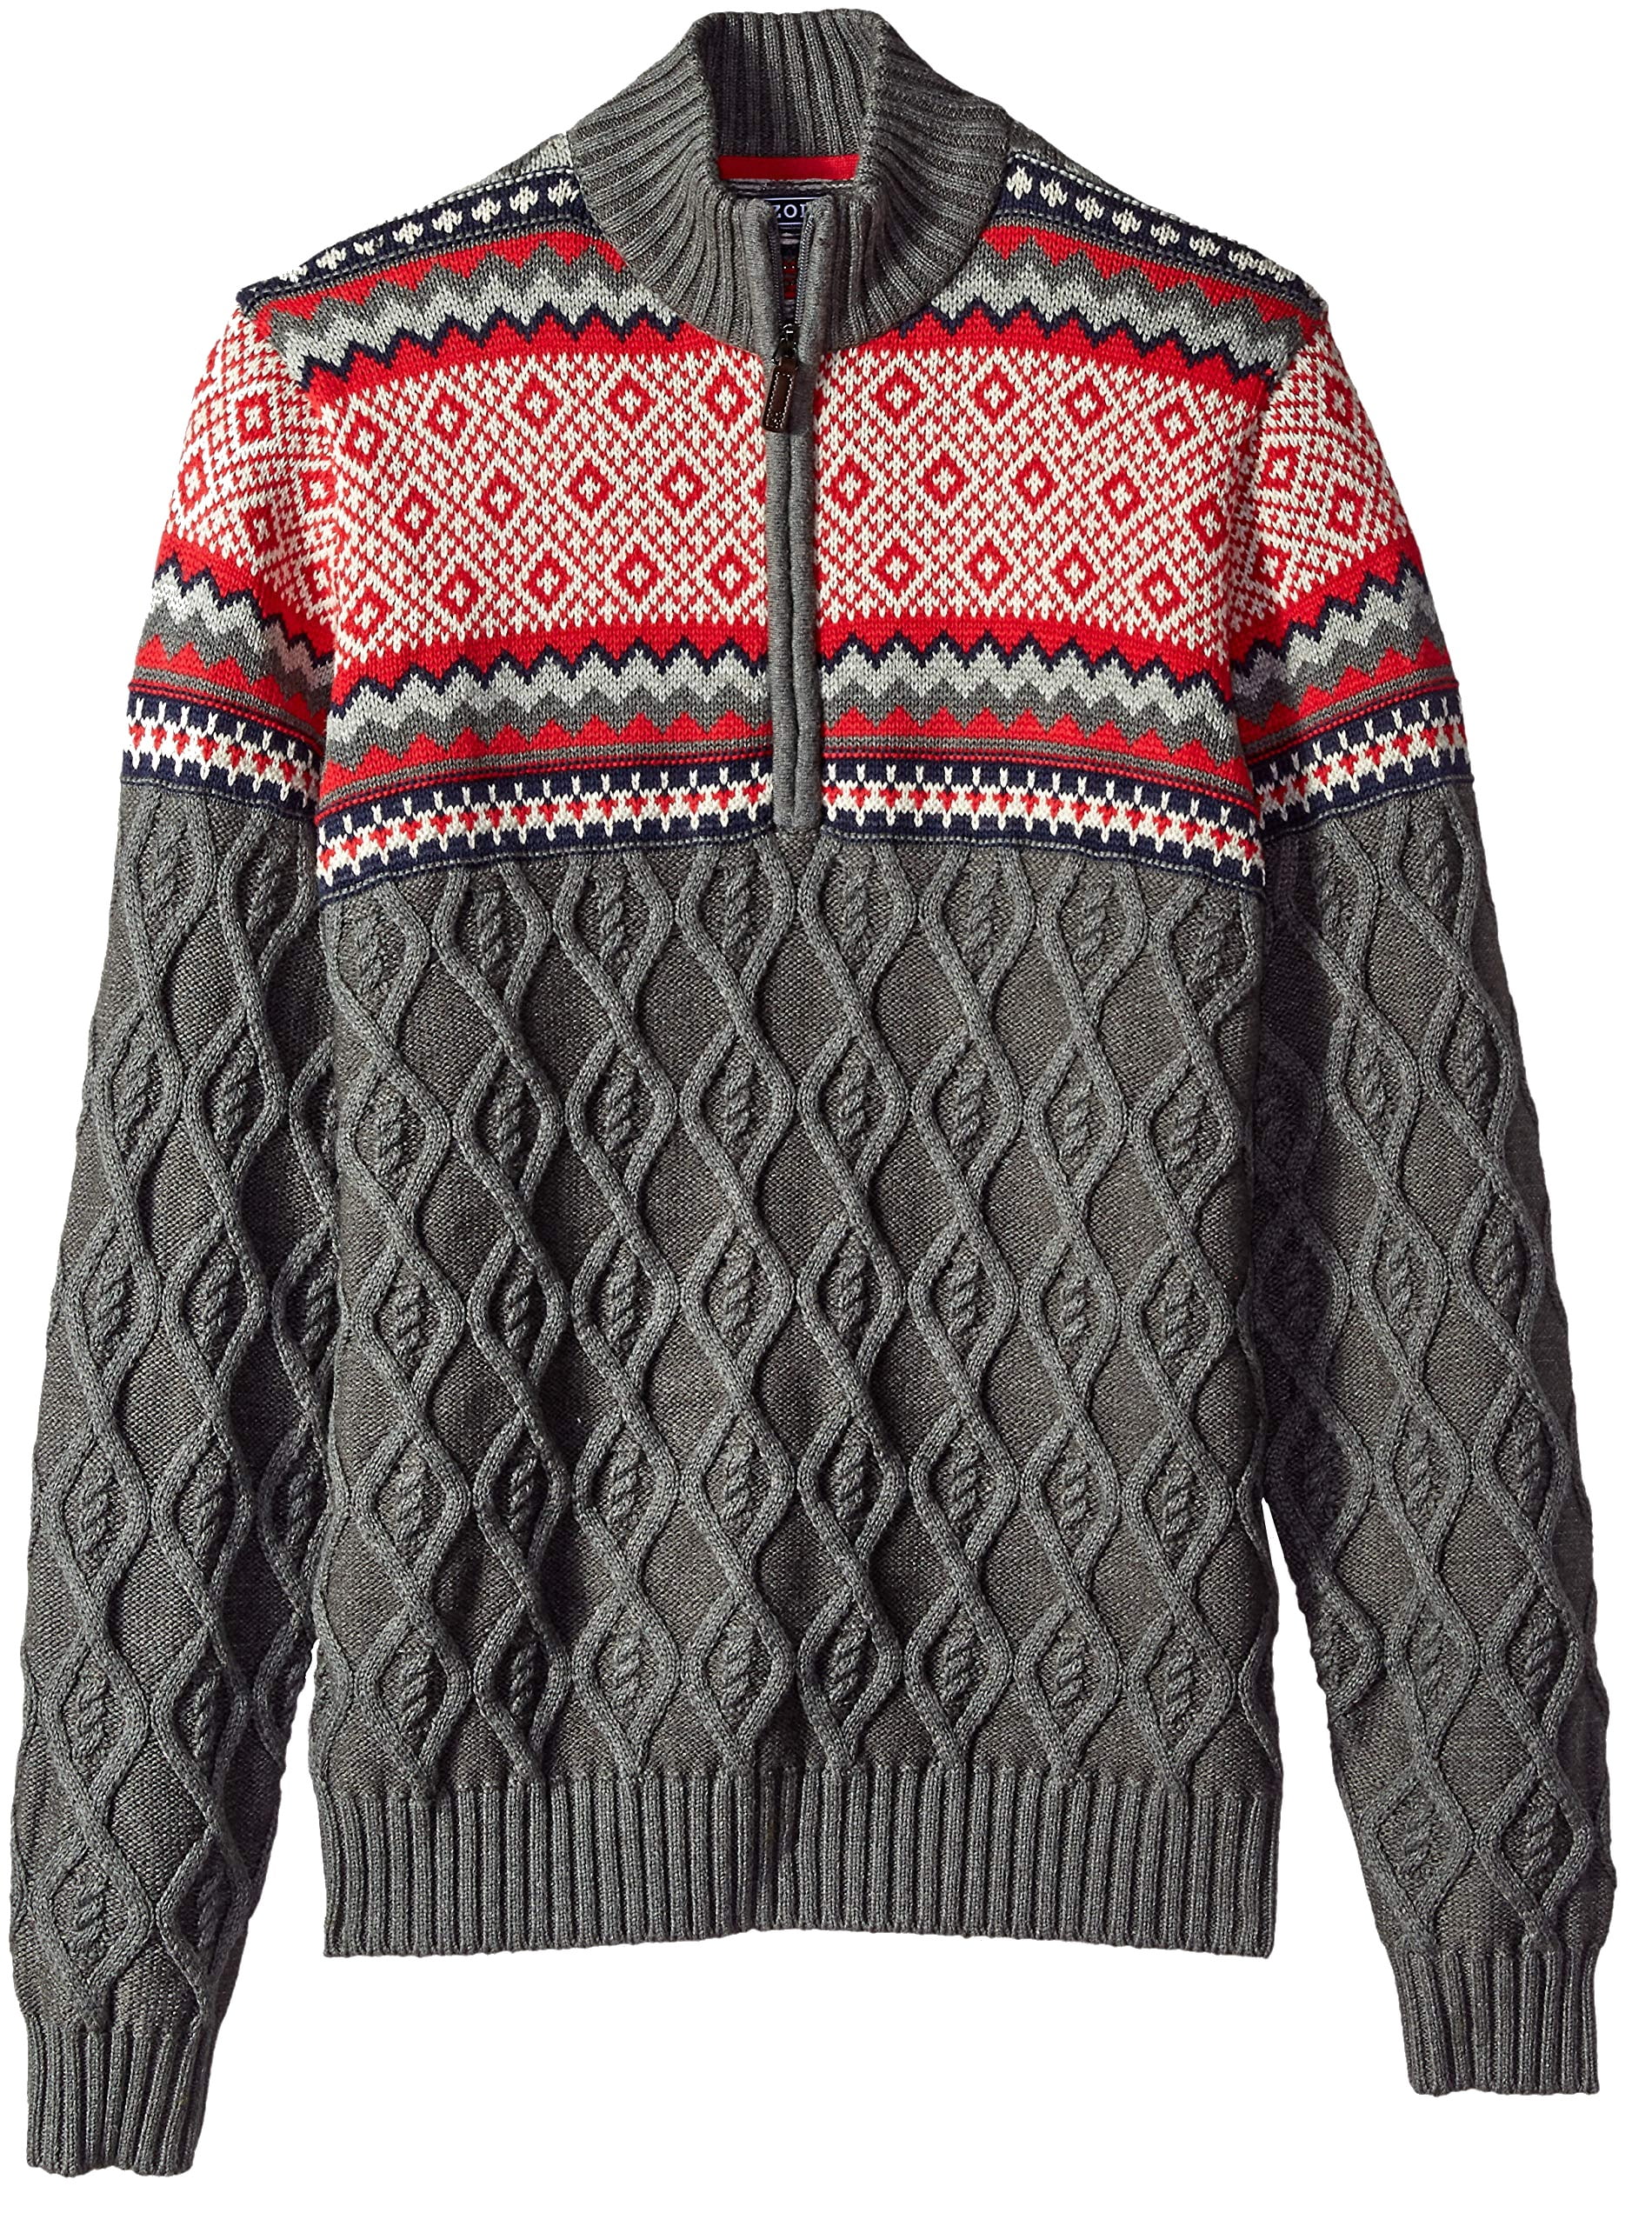 IZOD - Mens Sweater 1/2 Zip Fair Isle Pull-Over Ribbed Knit XL ...